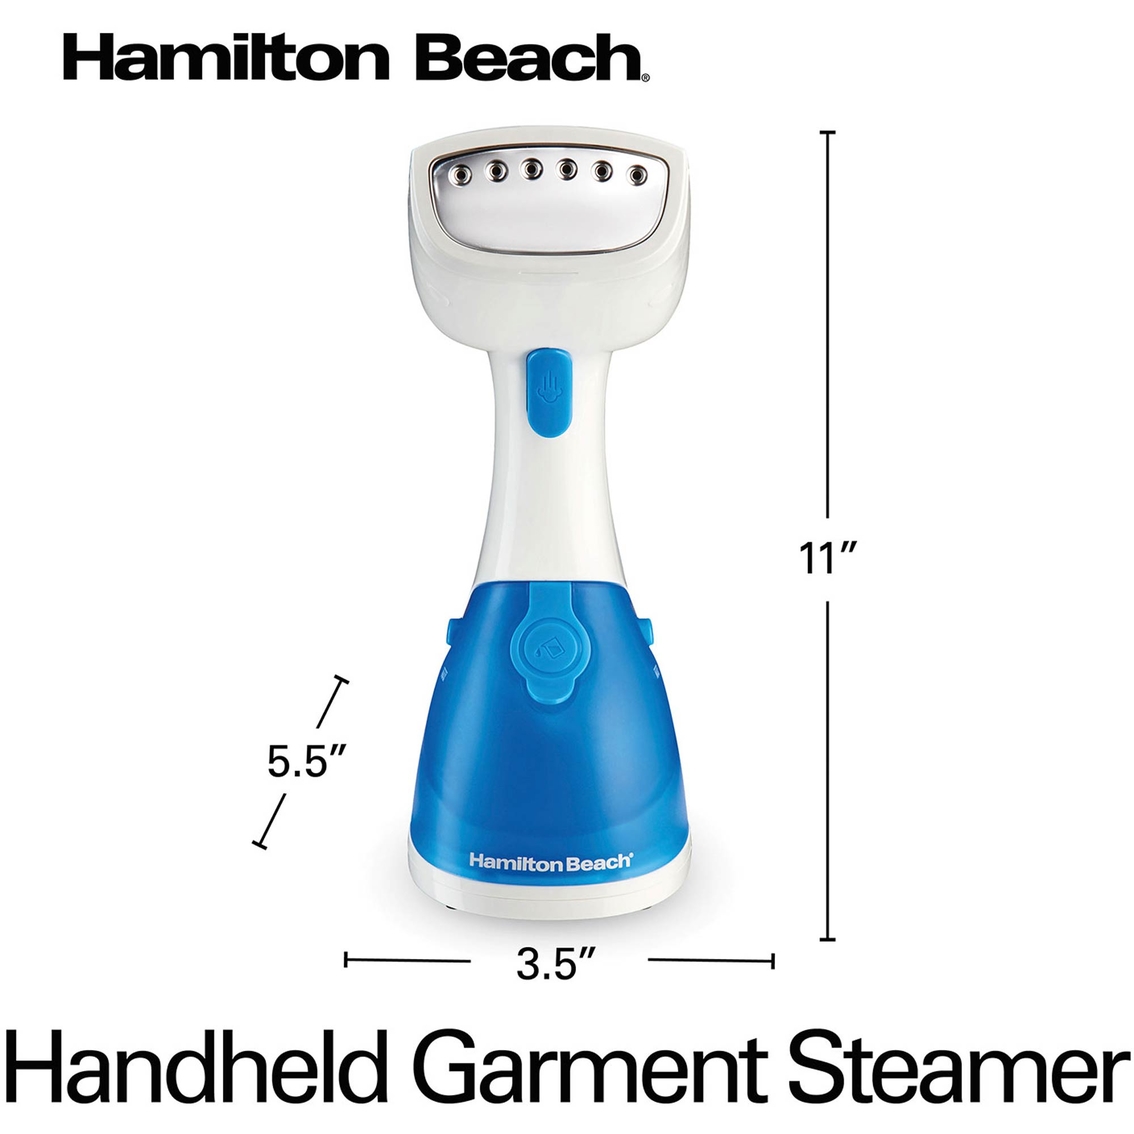 Hamilton Beach Handheld Garment Steamer - Image 5 of 10